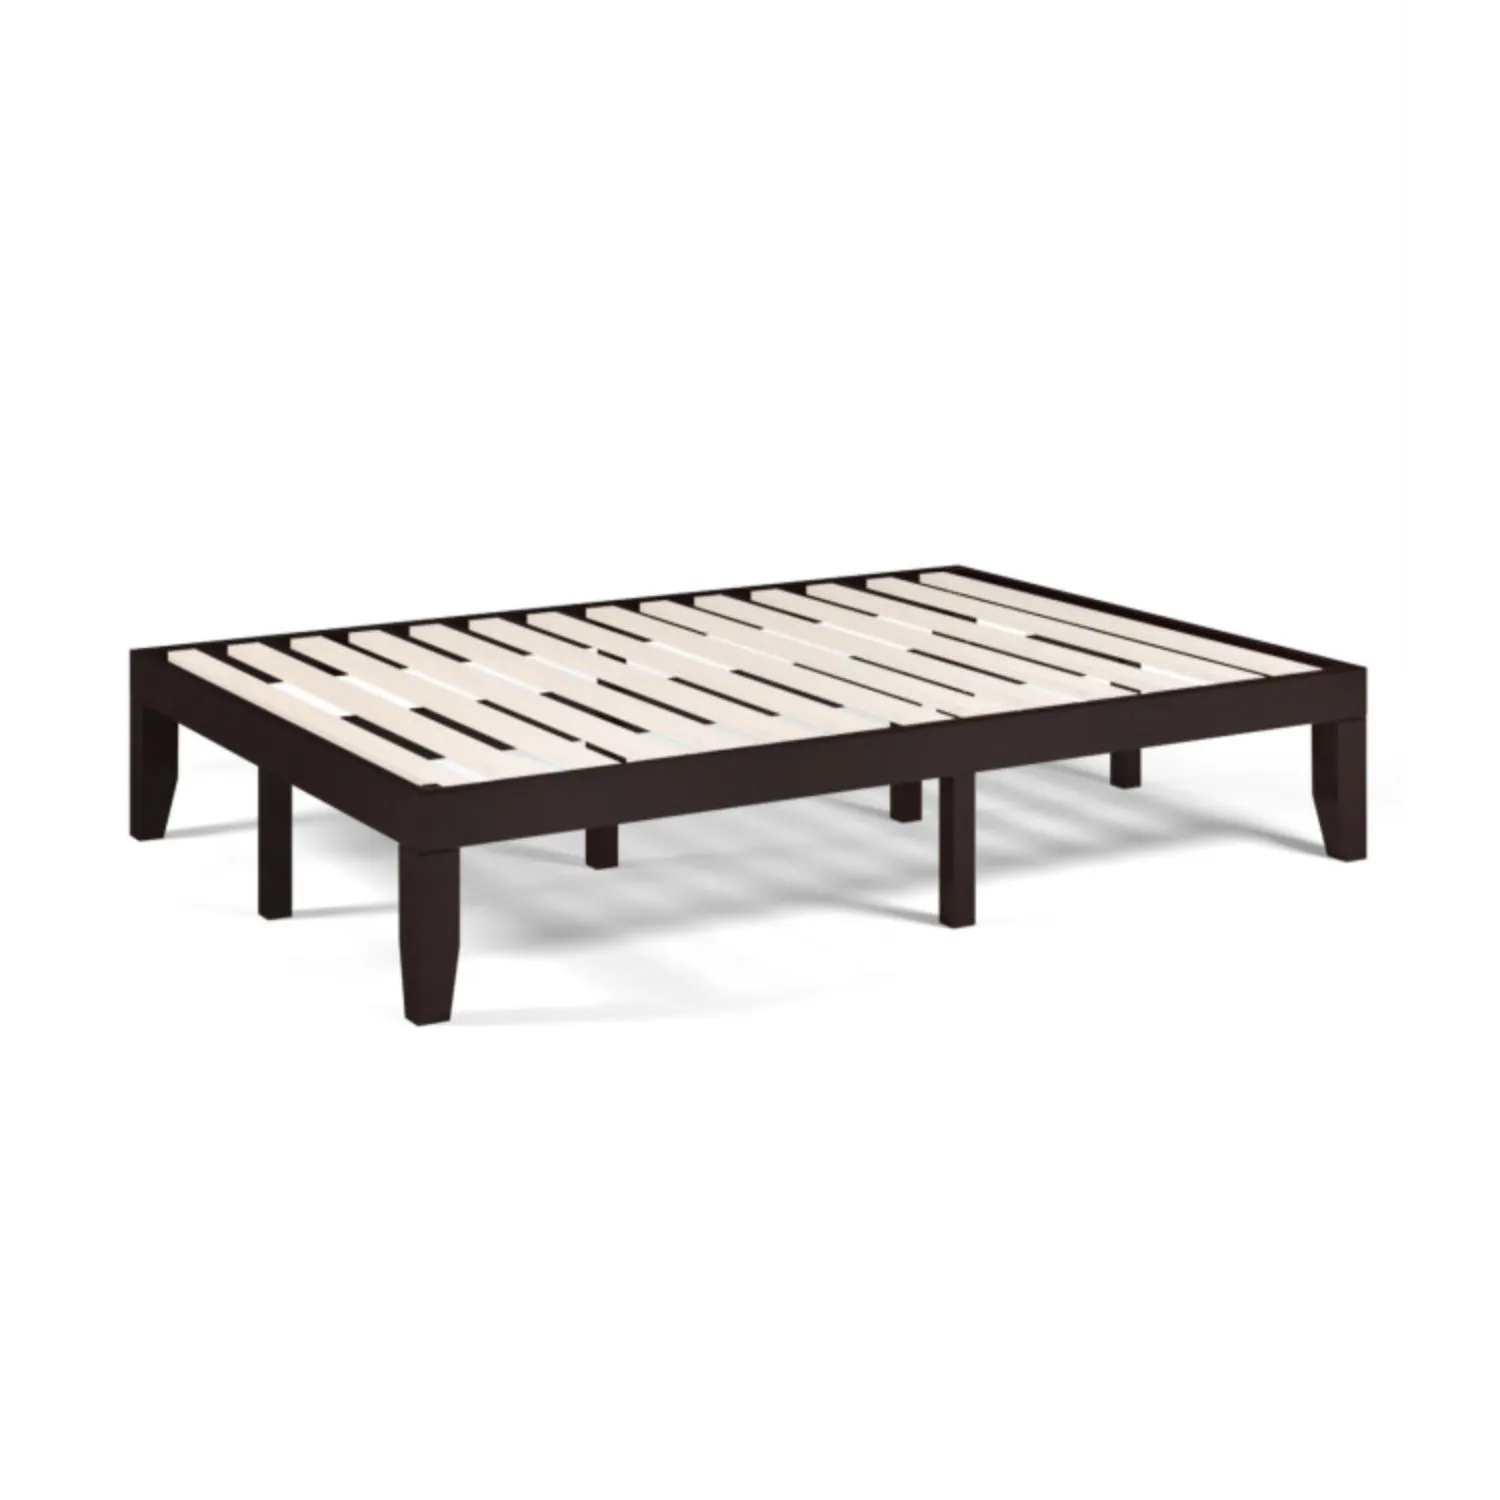 14 Inch Full Size Wood Platform Bed Frame with Wood Slat Support